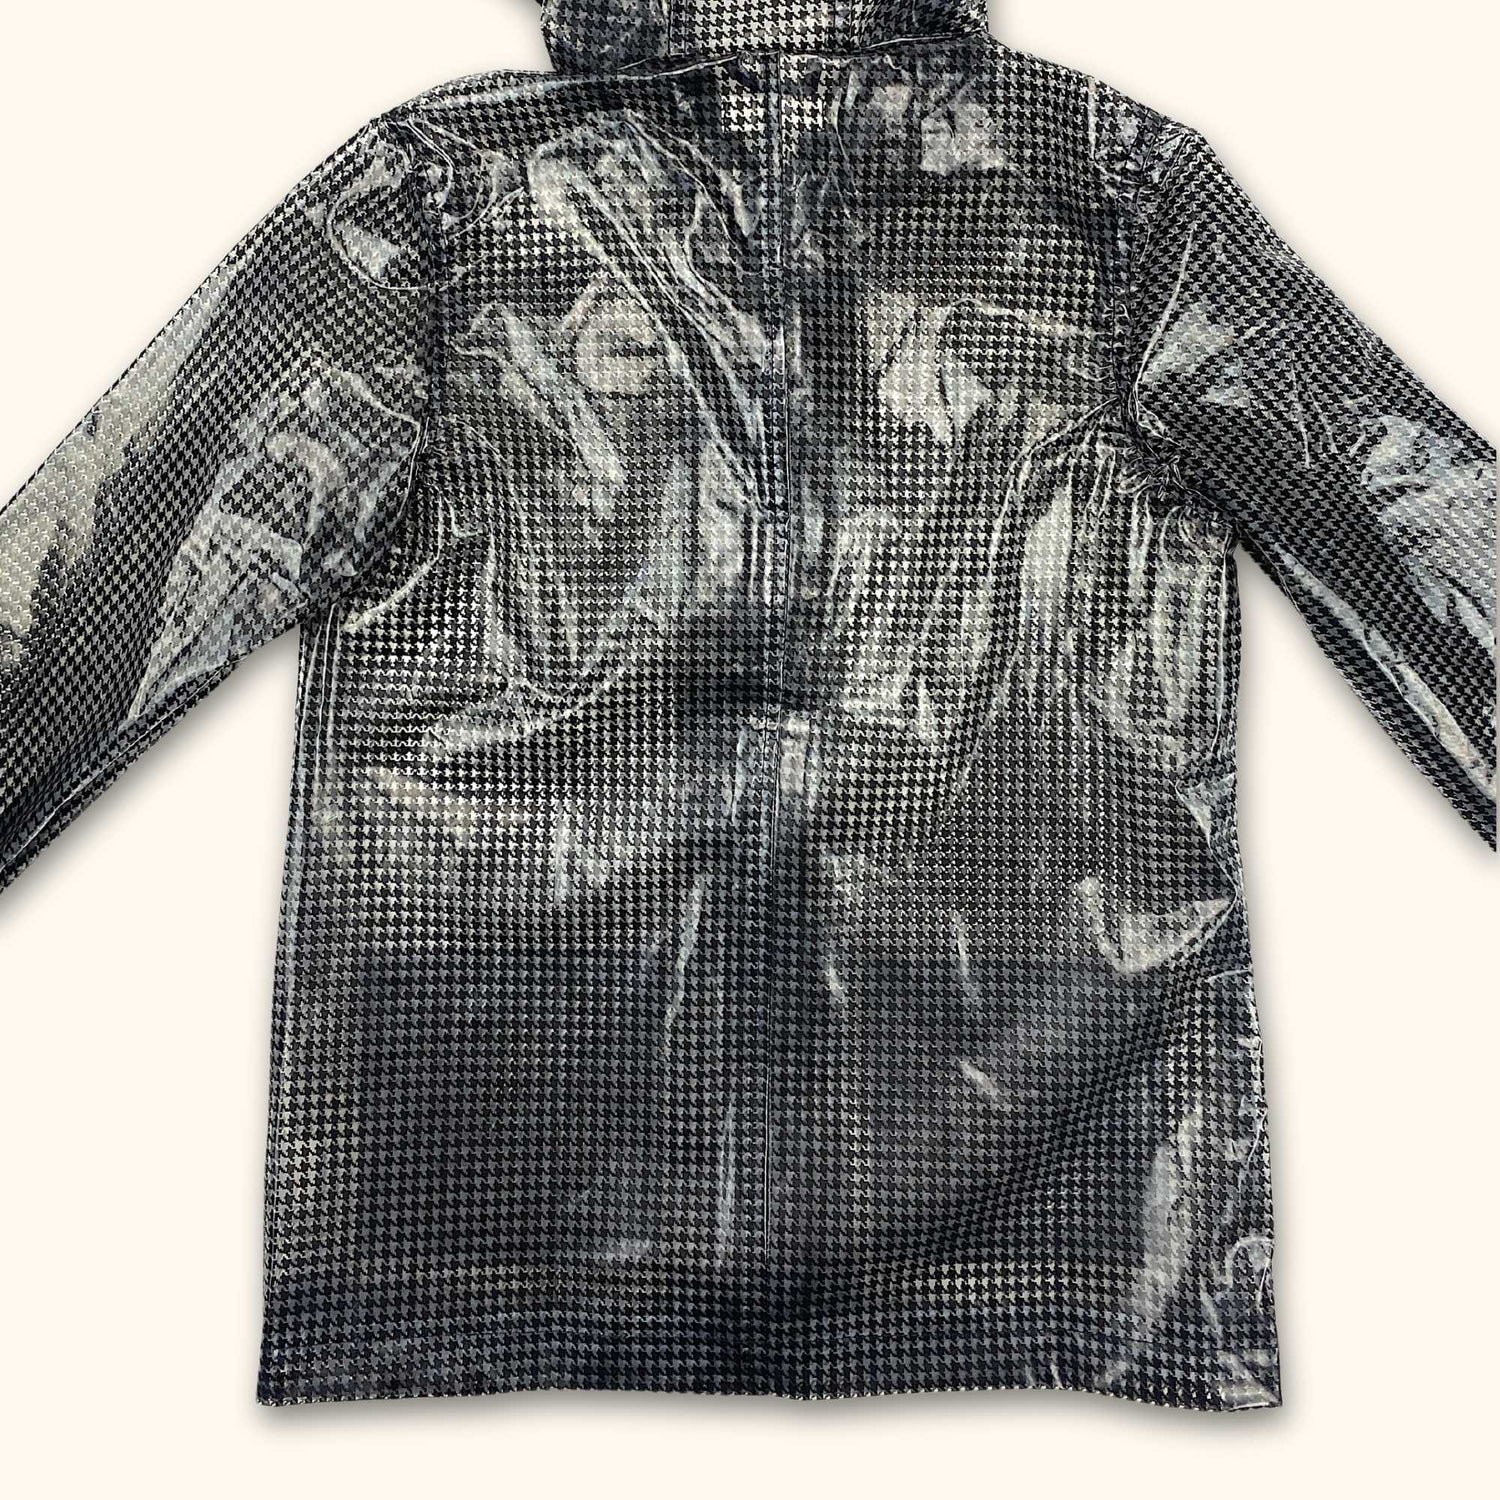 Urban Bliss Houndstooth Grey Clear Raincoat - Size 8 - Urban bliss - Coats &amp; jackets